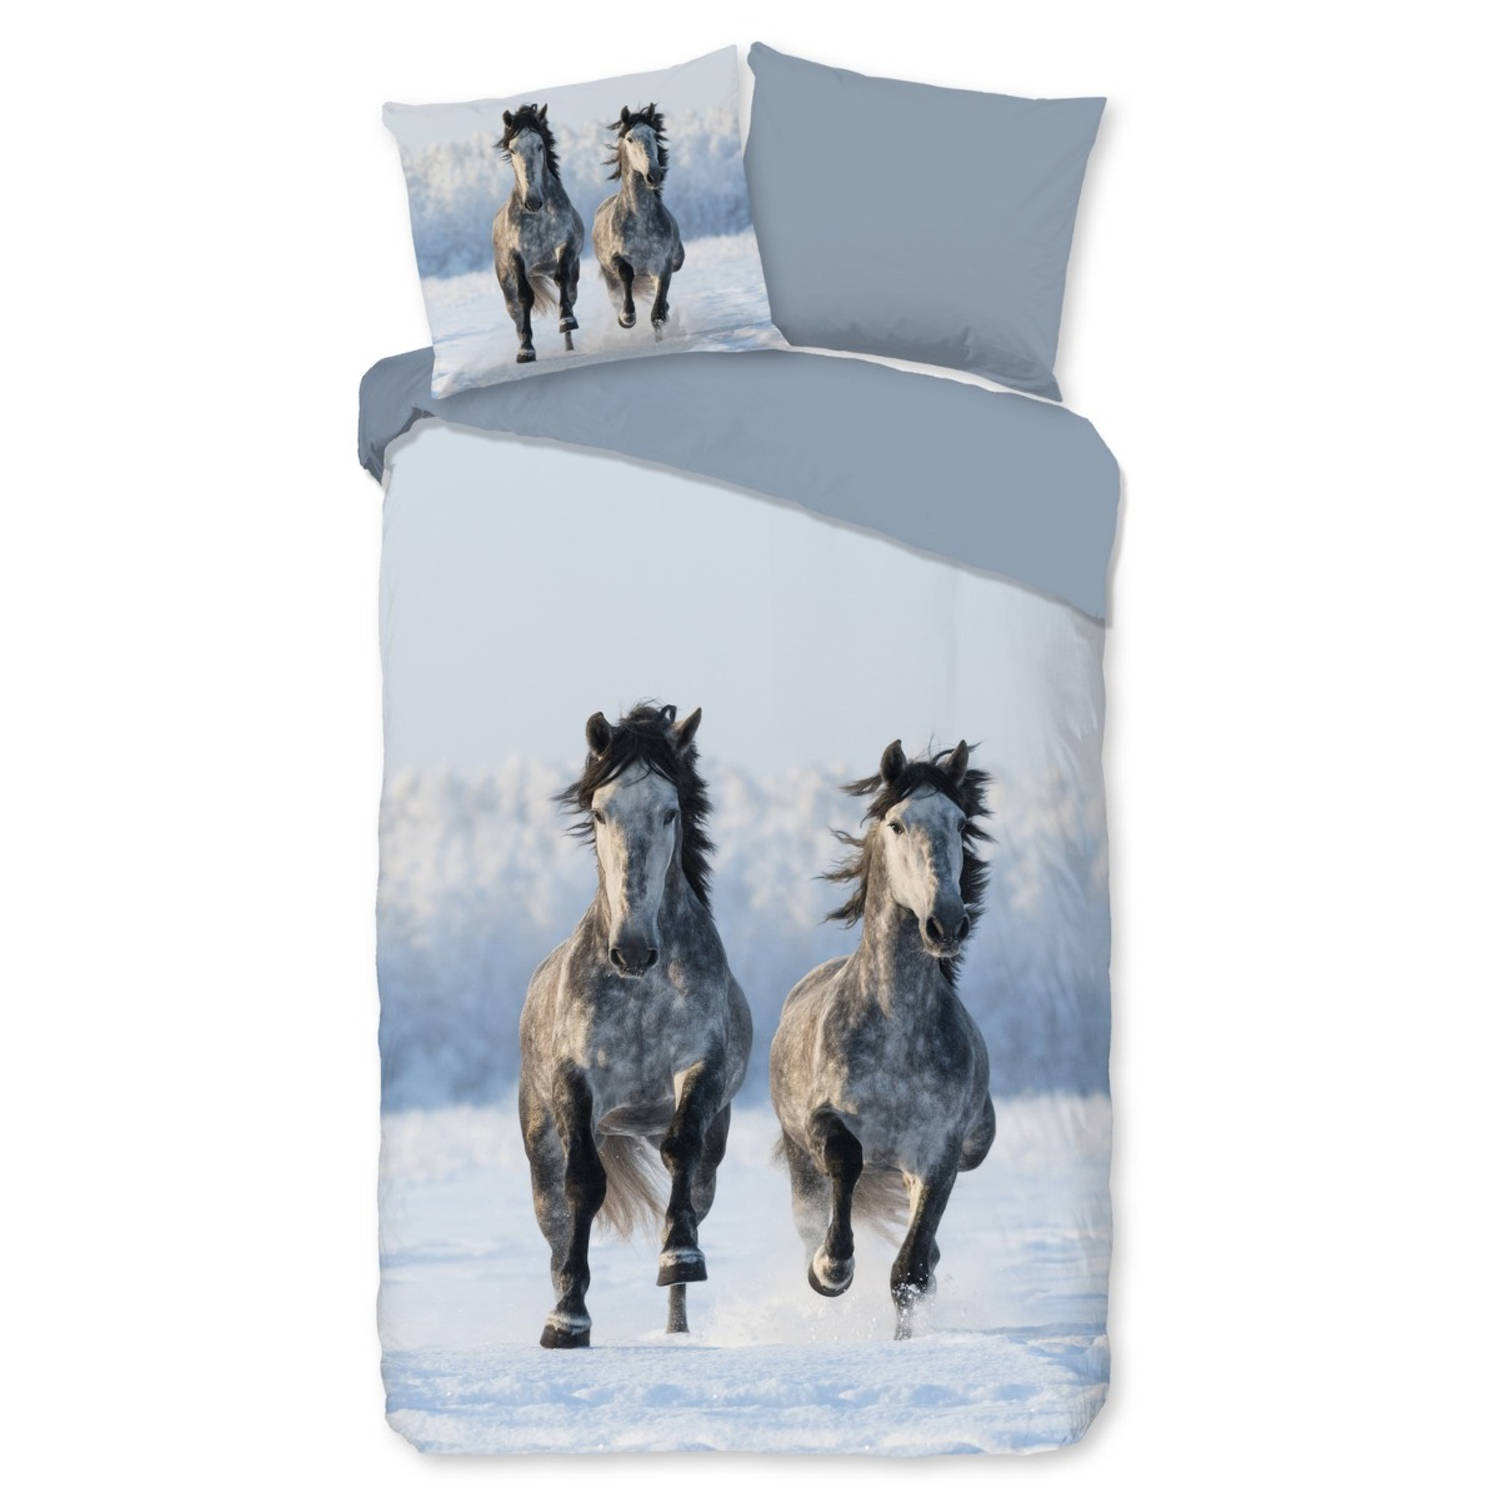 Good Morning Kinder Dekbedovertrek Flanel Snowhorses grey 140x200-220cm